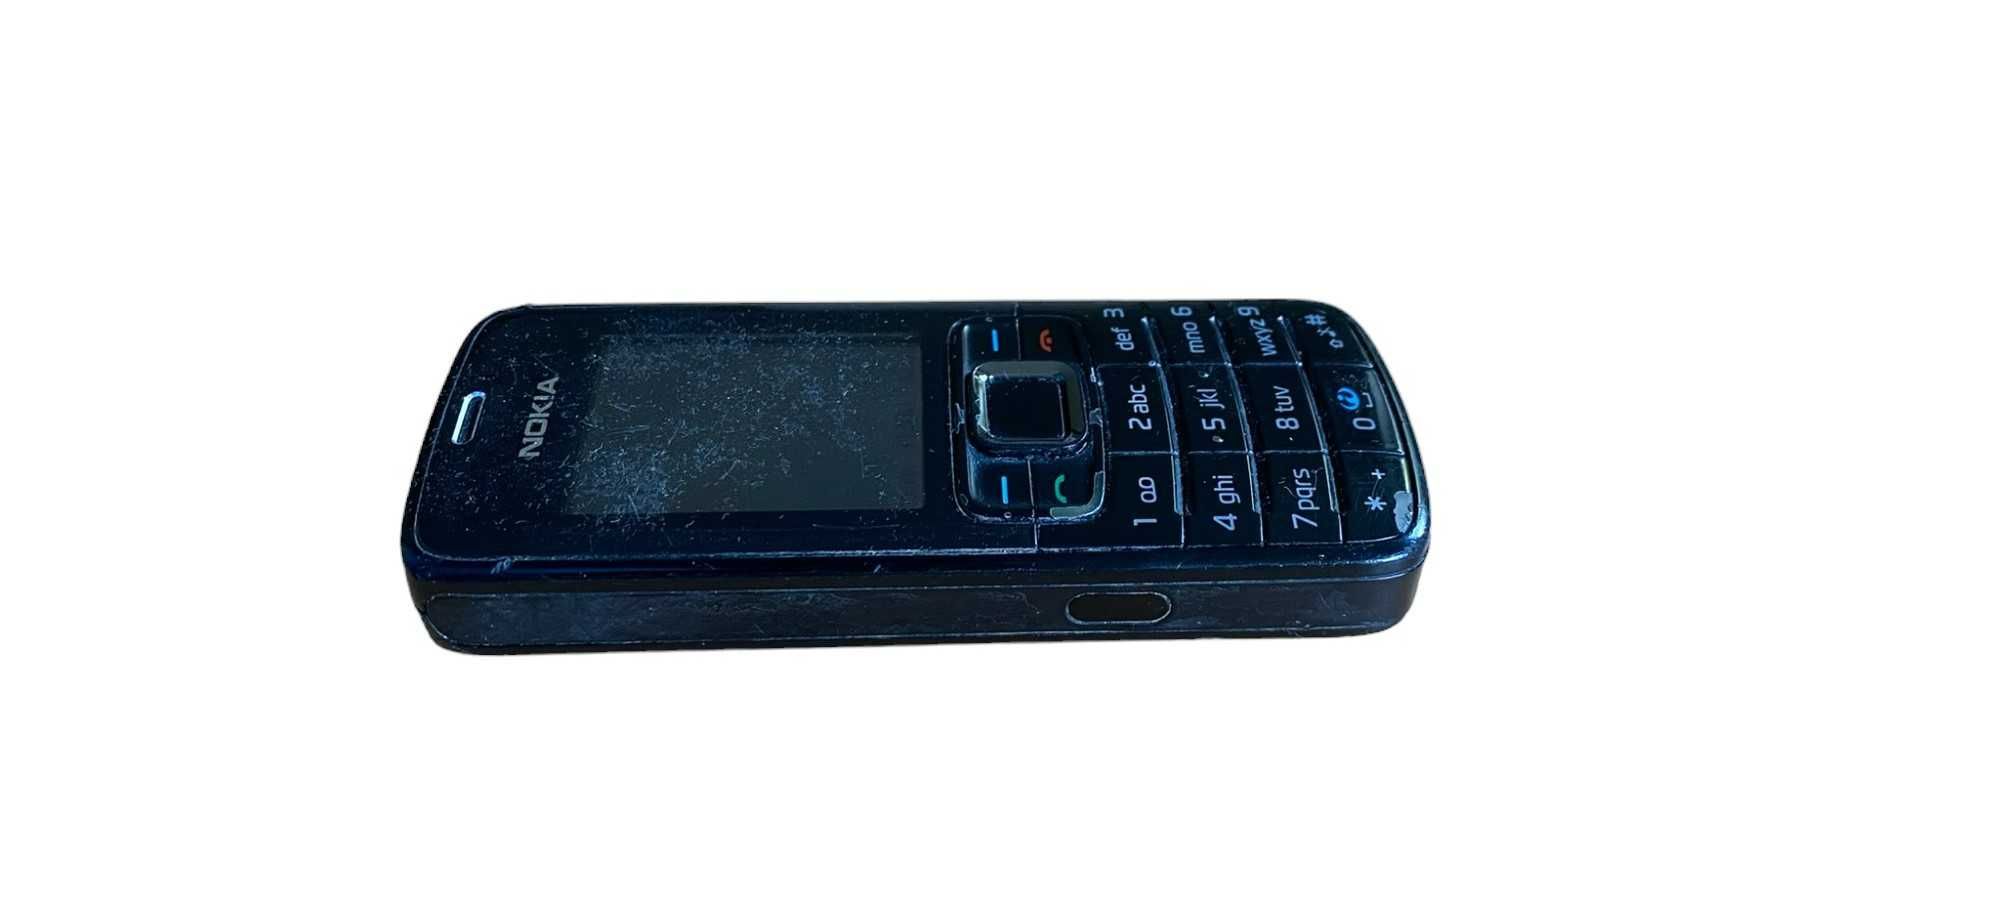 Telefon Nokia 3110c ( RM-237 )